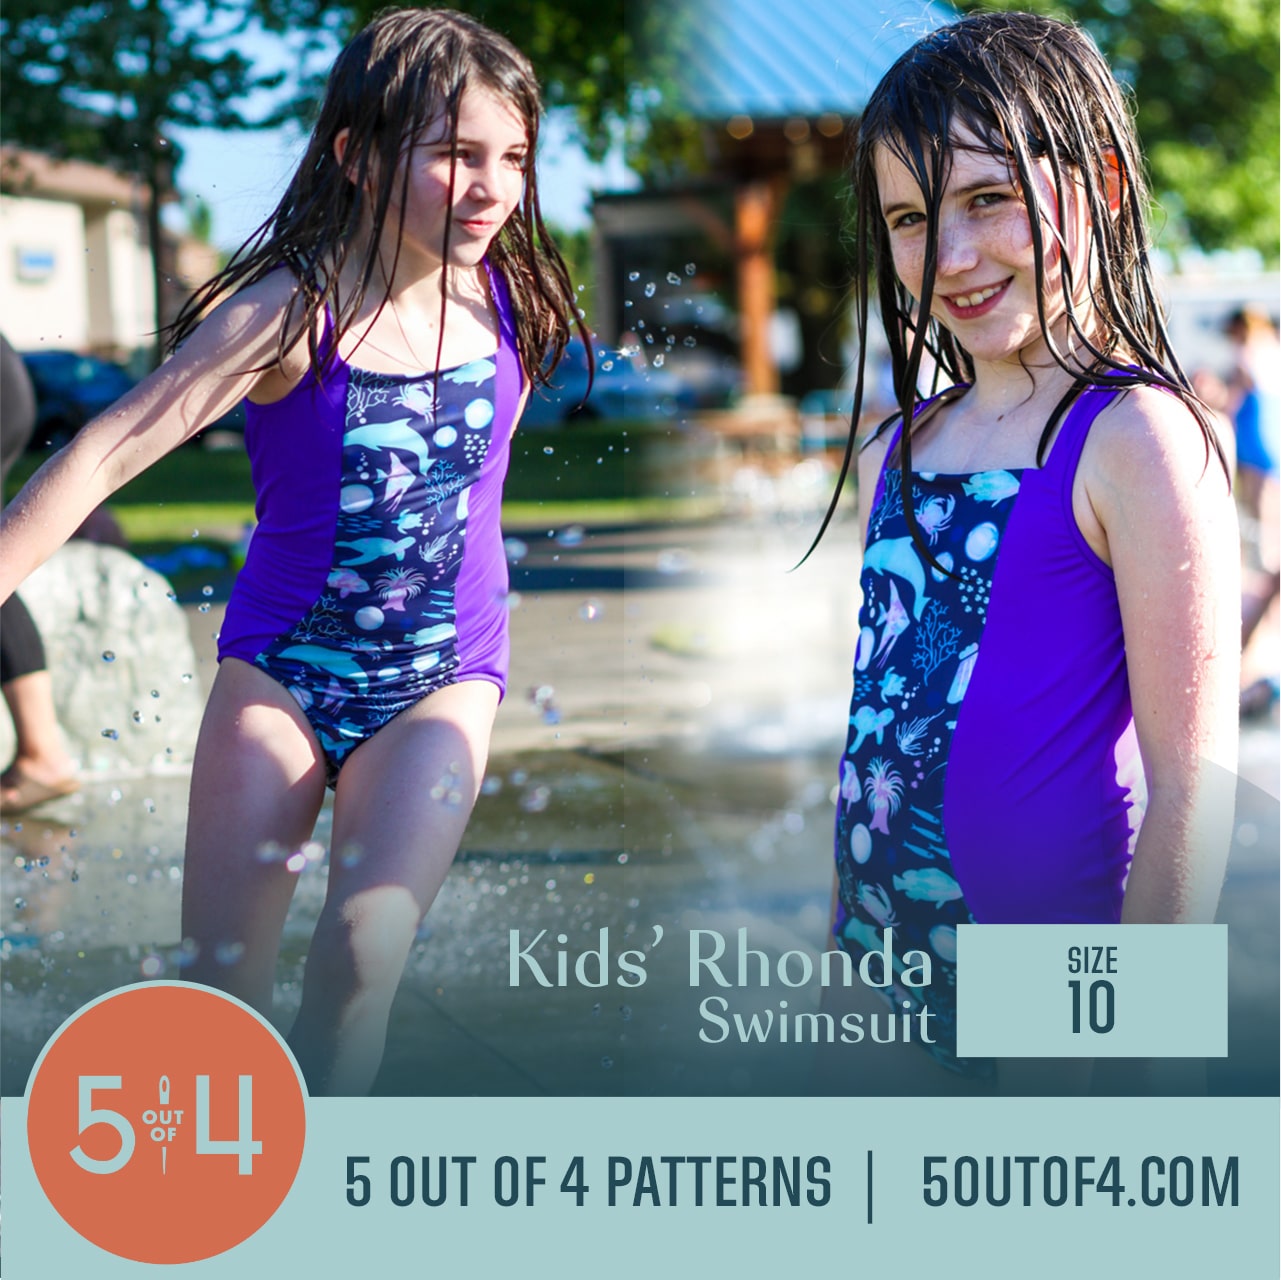 Kids' Rhonda Swimsuit